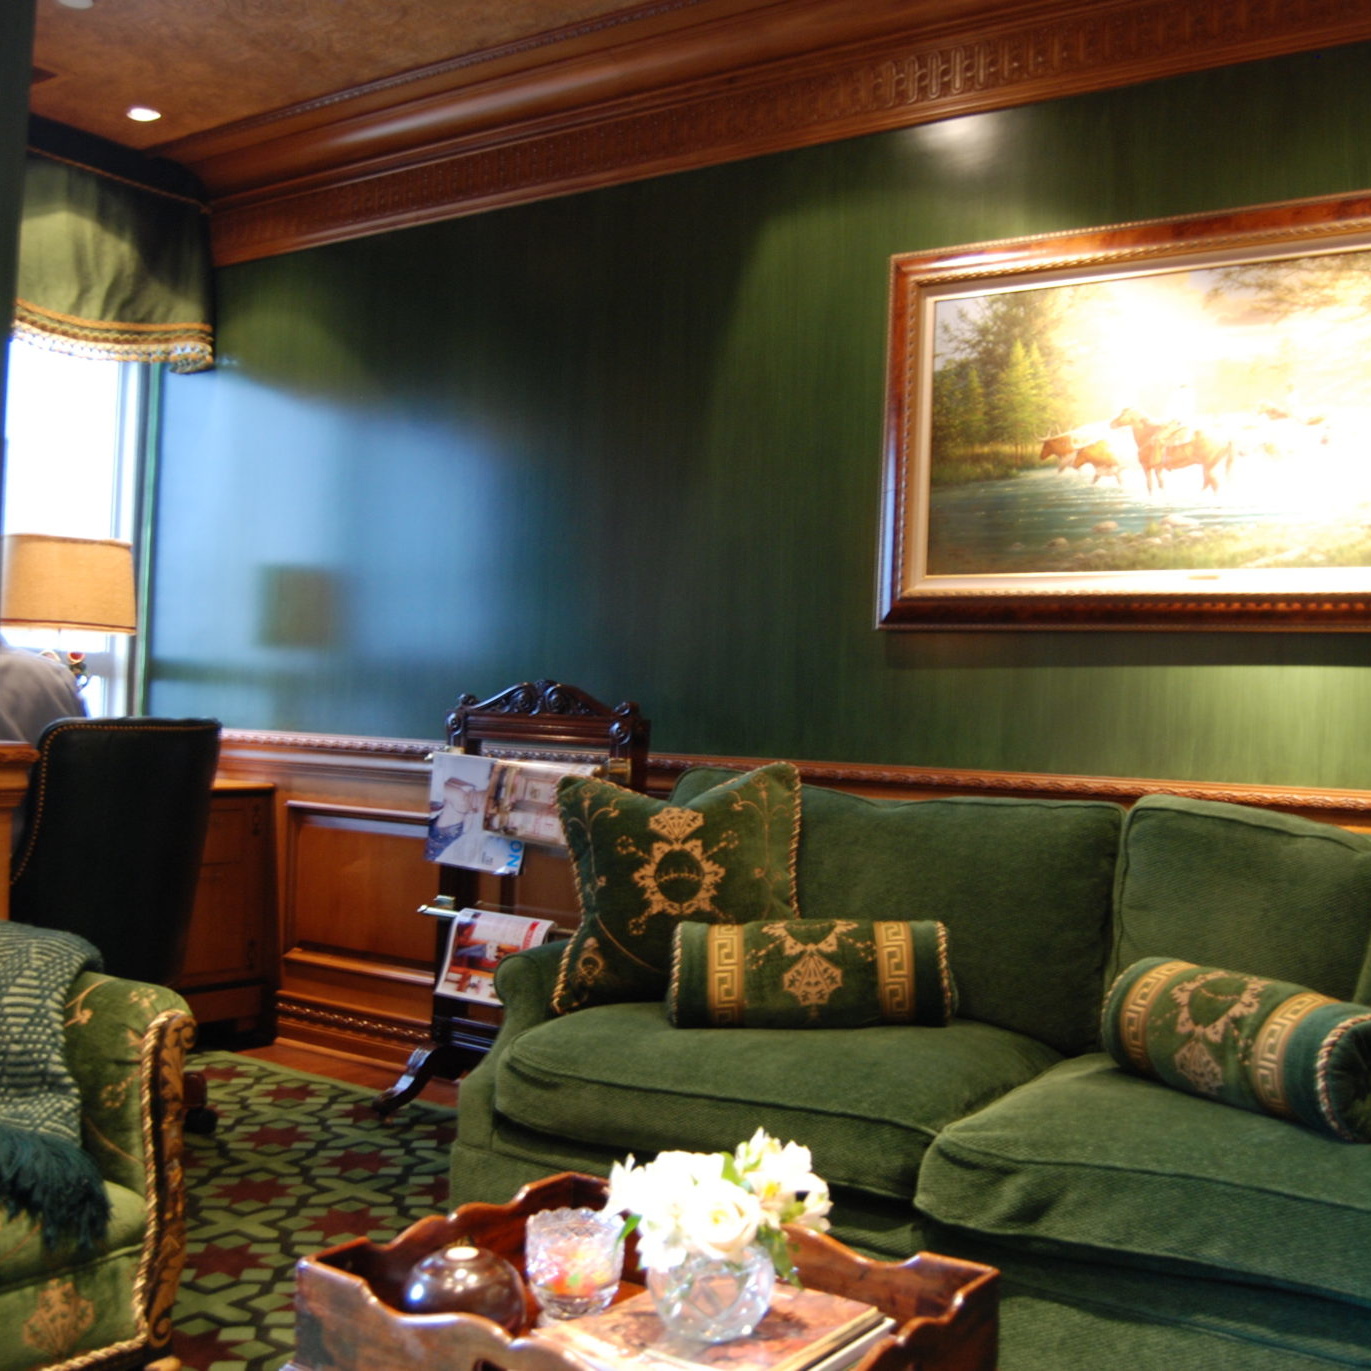 Green and gold living room interior design with velvet sofas